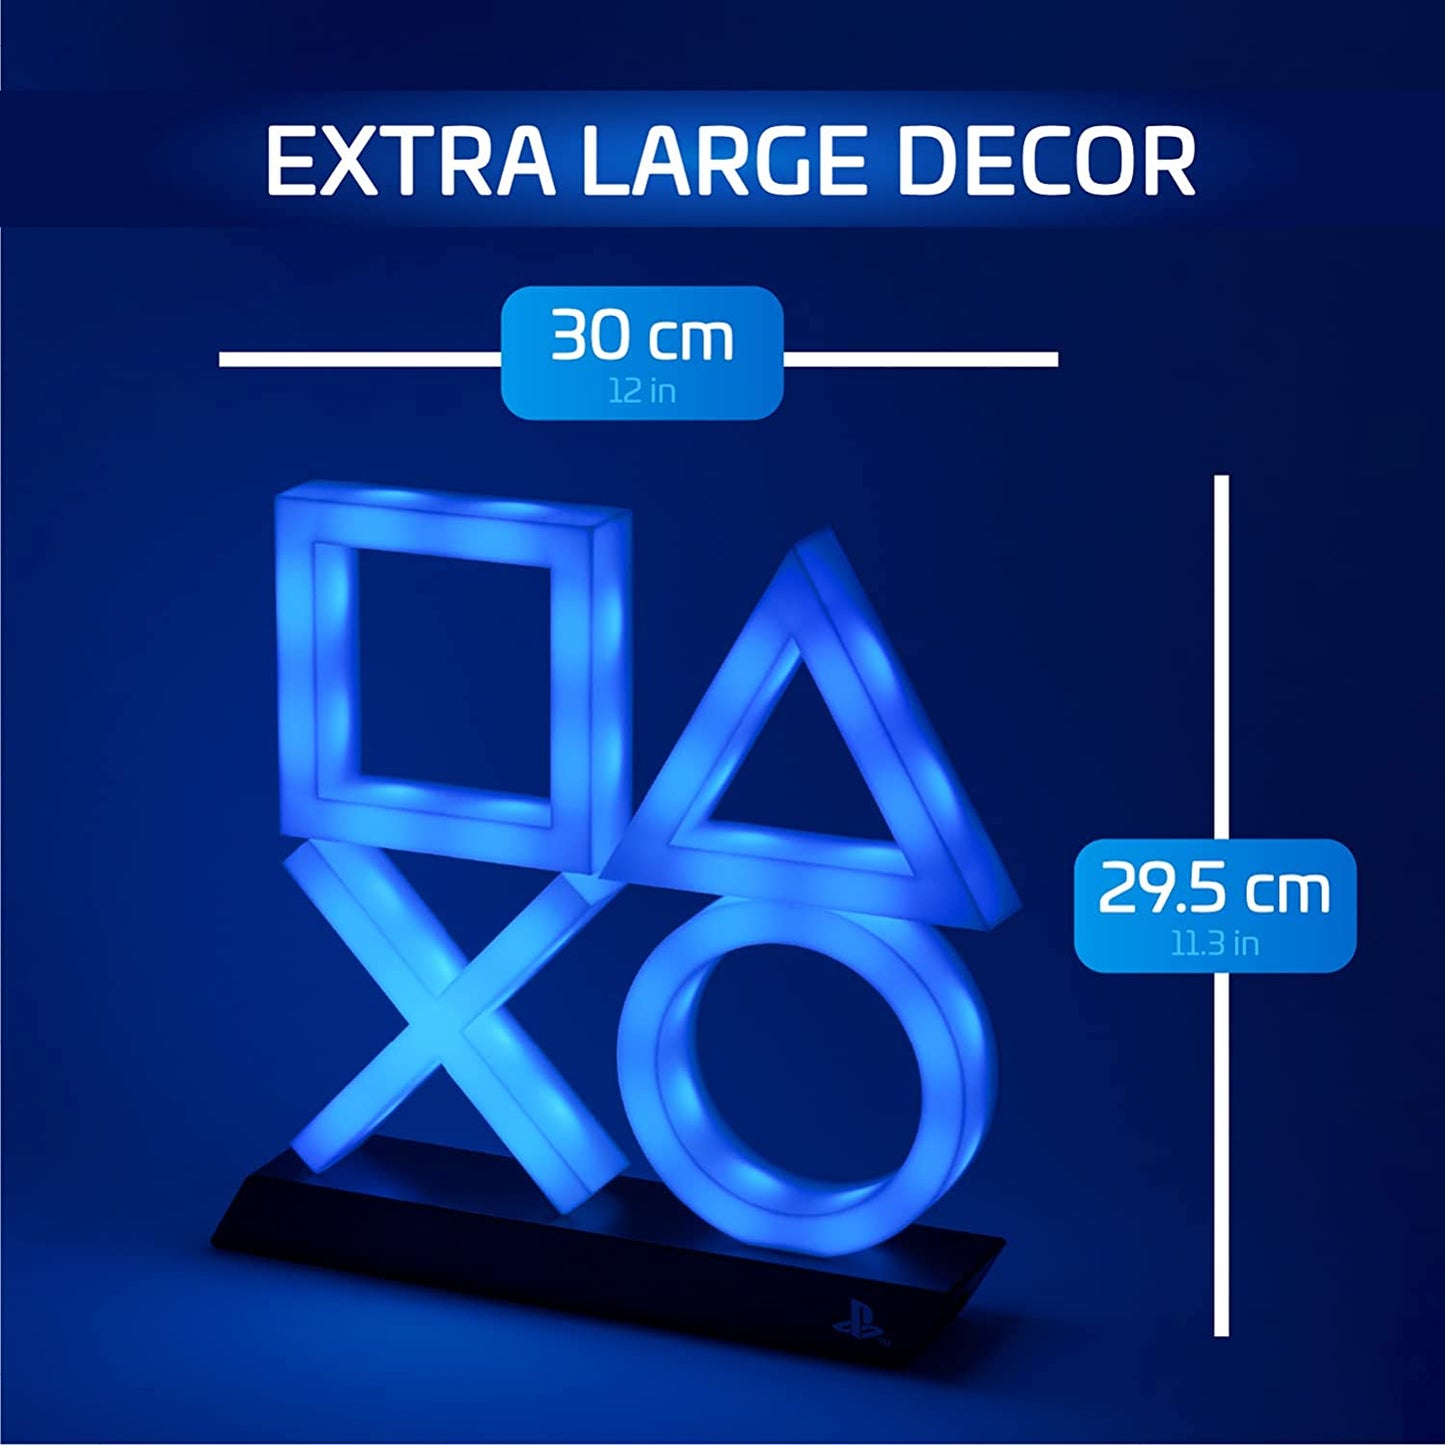 Playstation 5 Icons Light XL